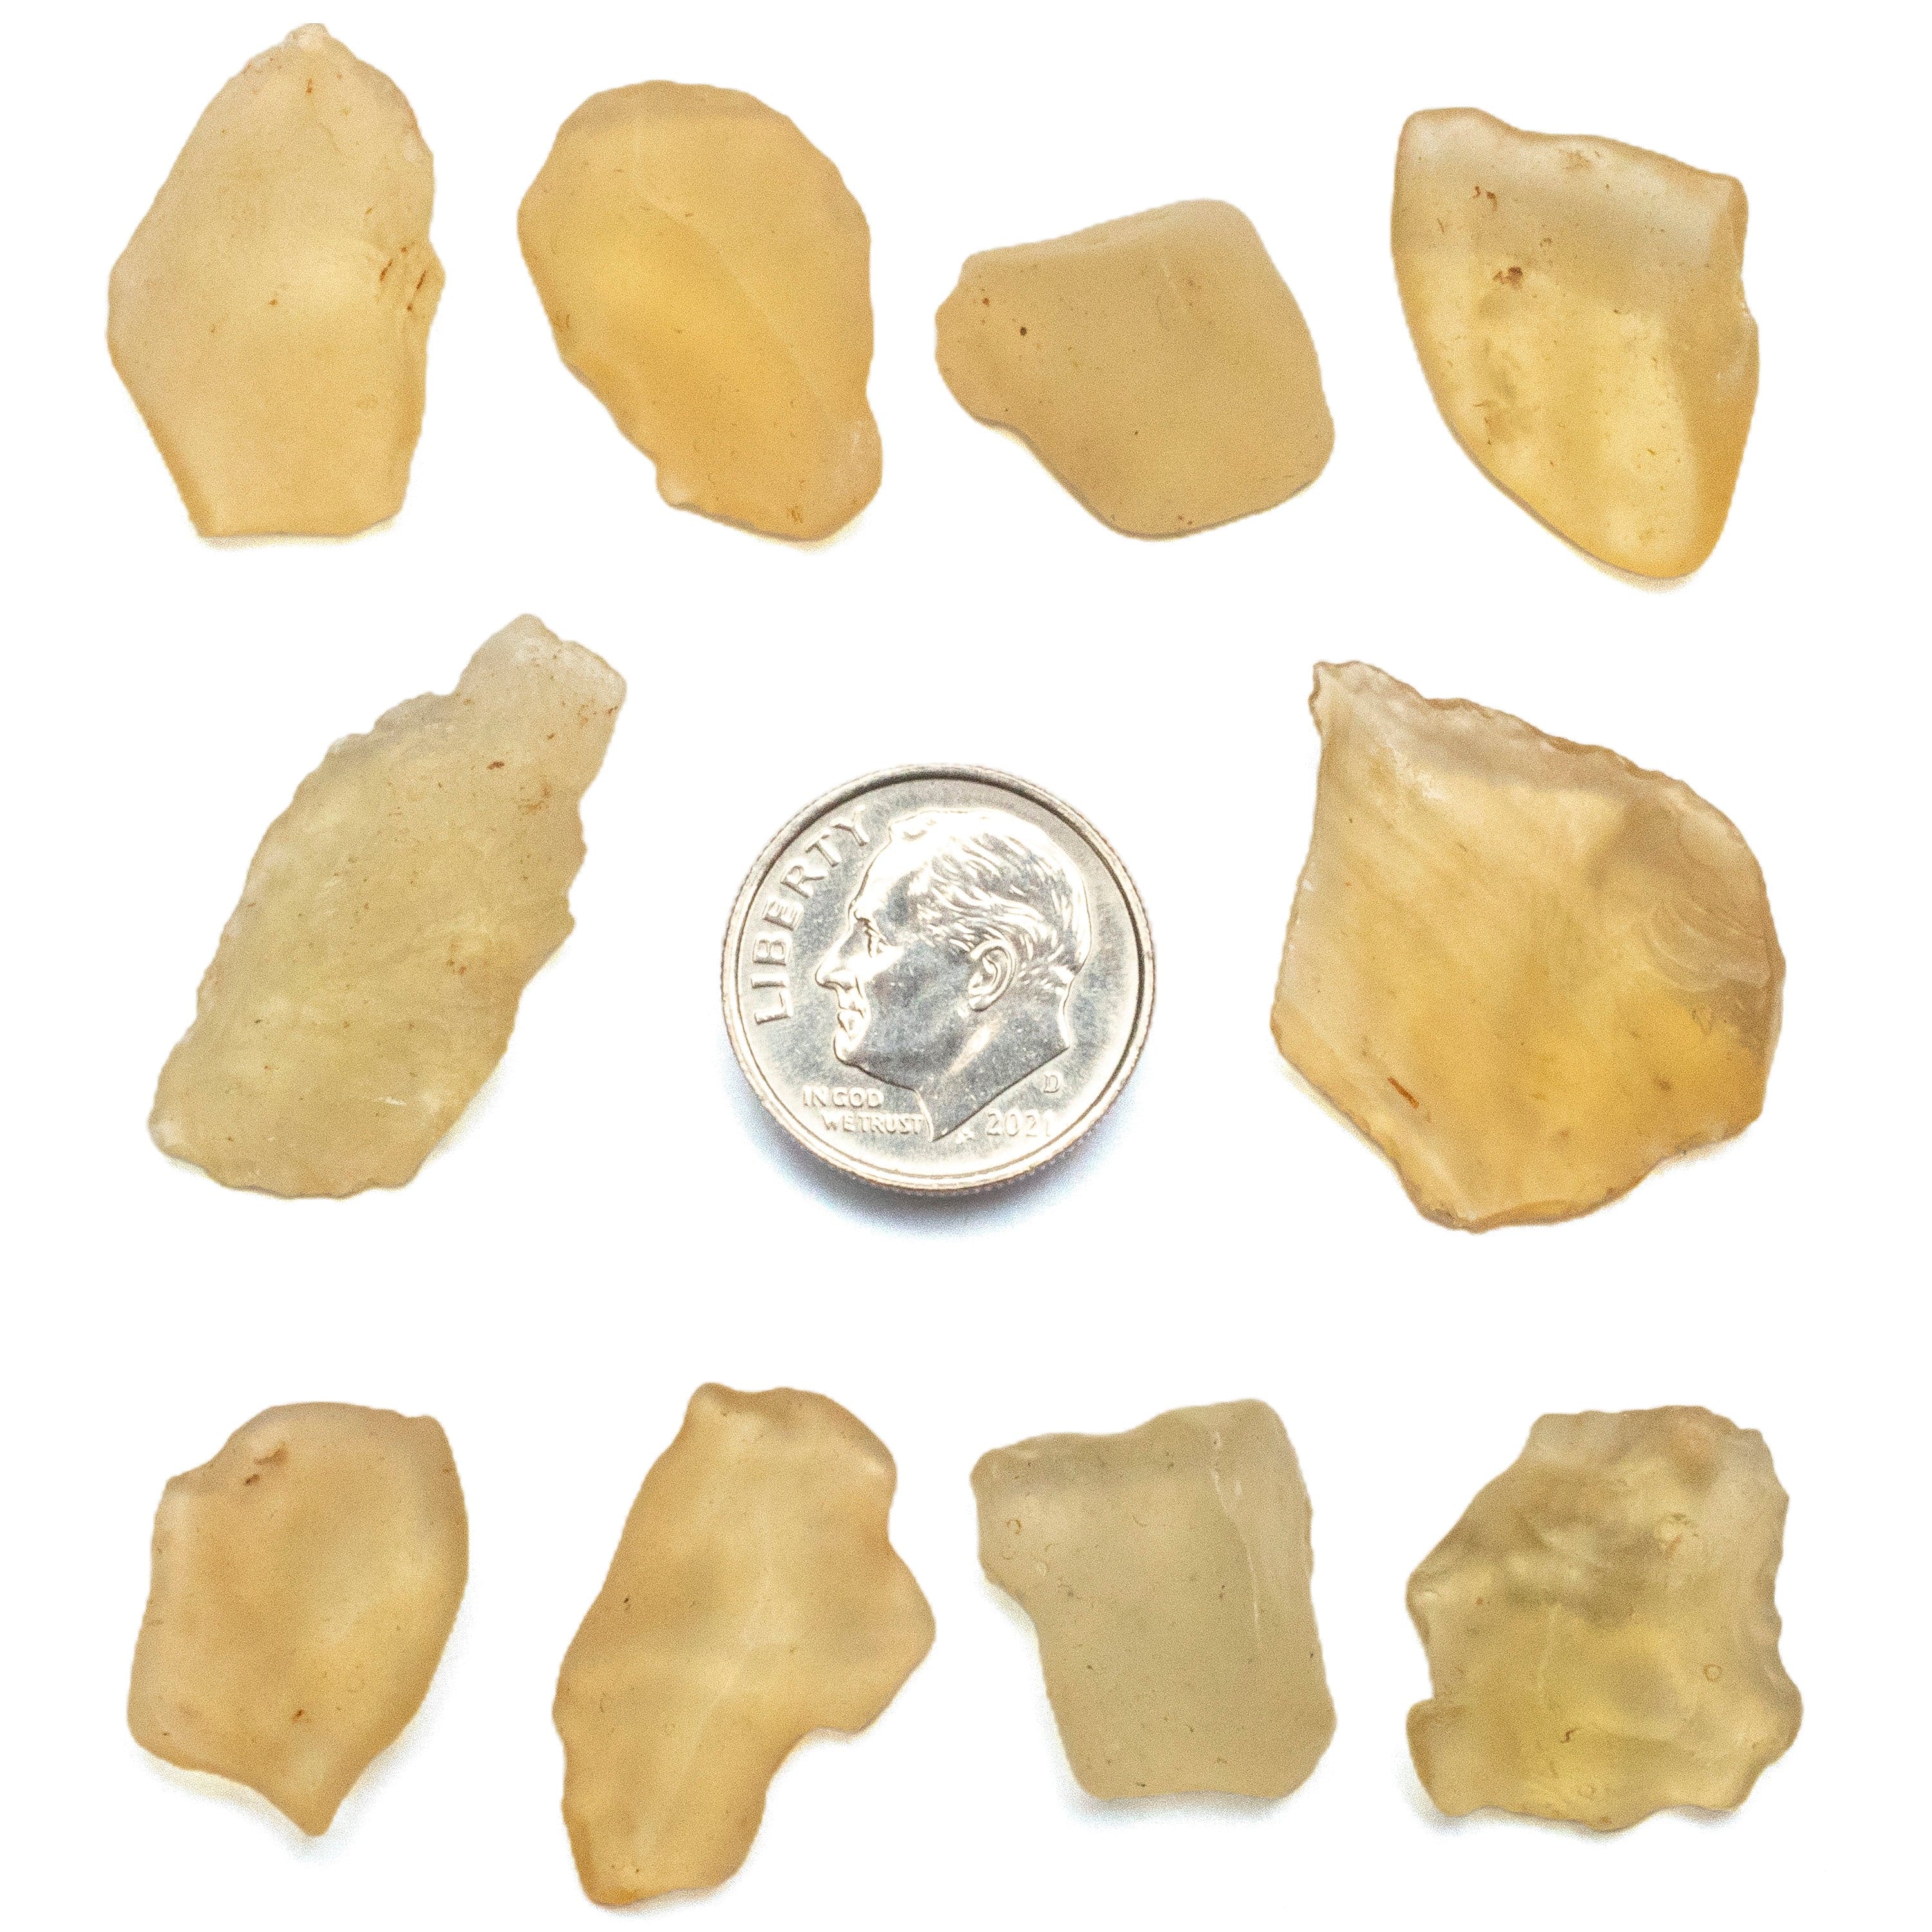 Kalifano Libyan Desert Glass Libyan Desert Glass Tektite: 1-2 grams / 5-10 carats LG30